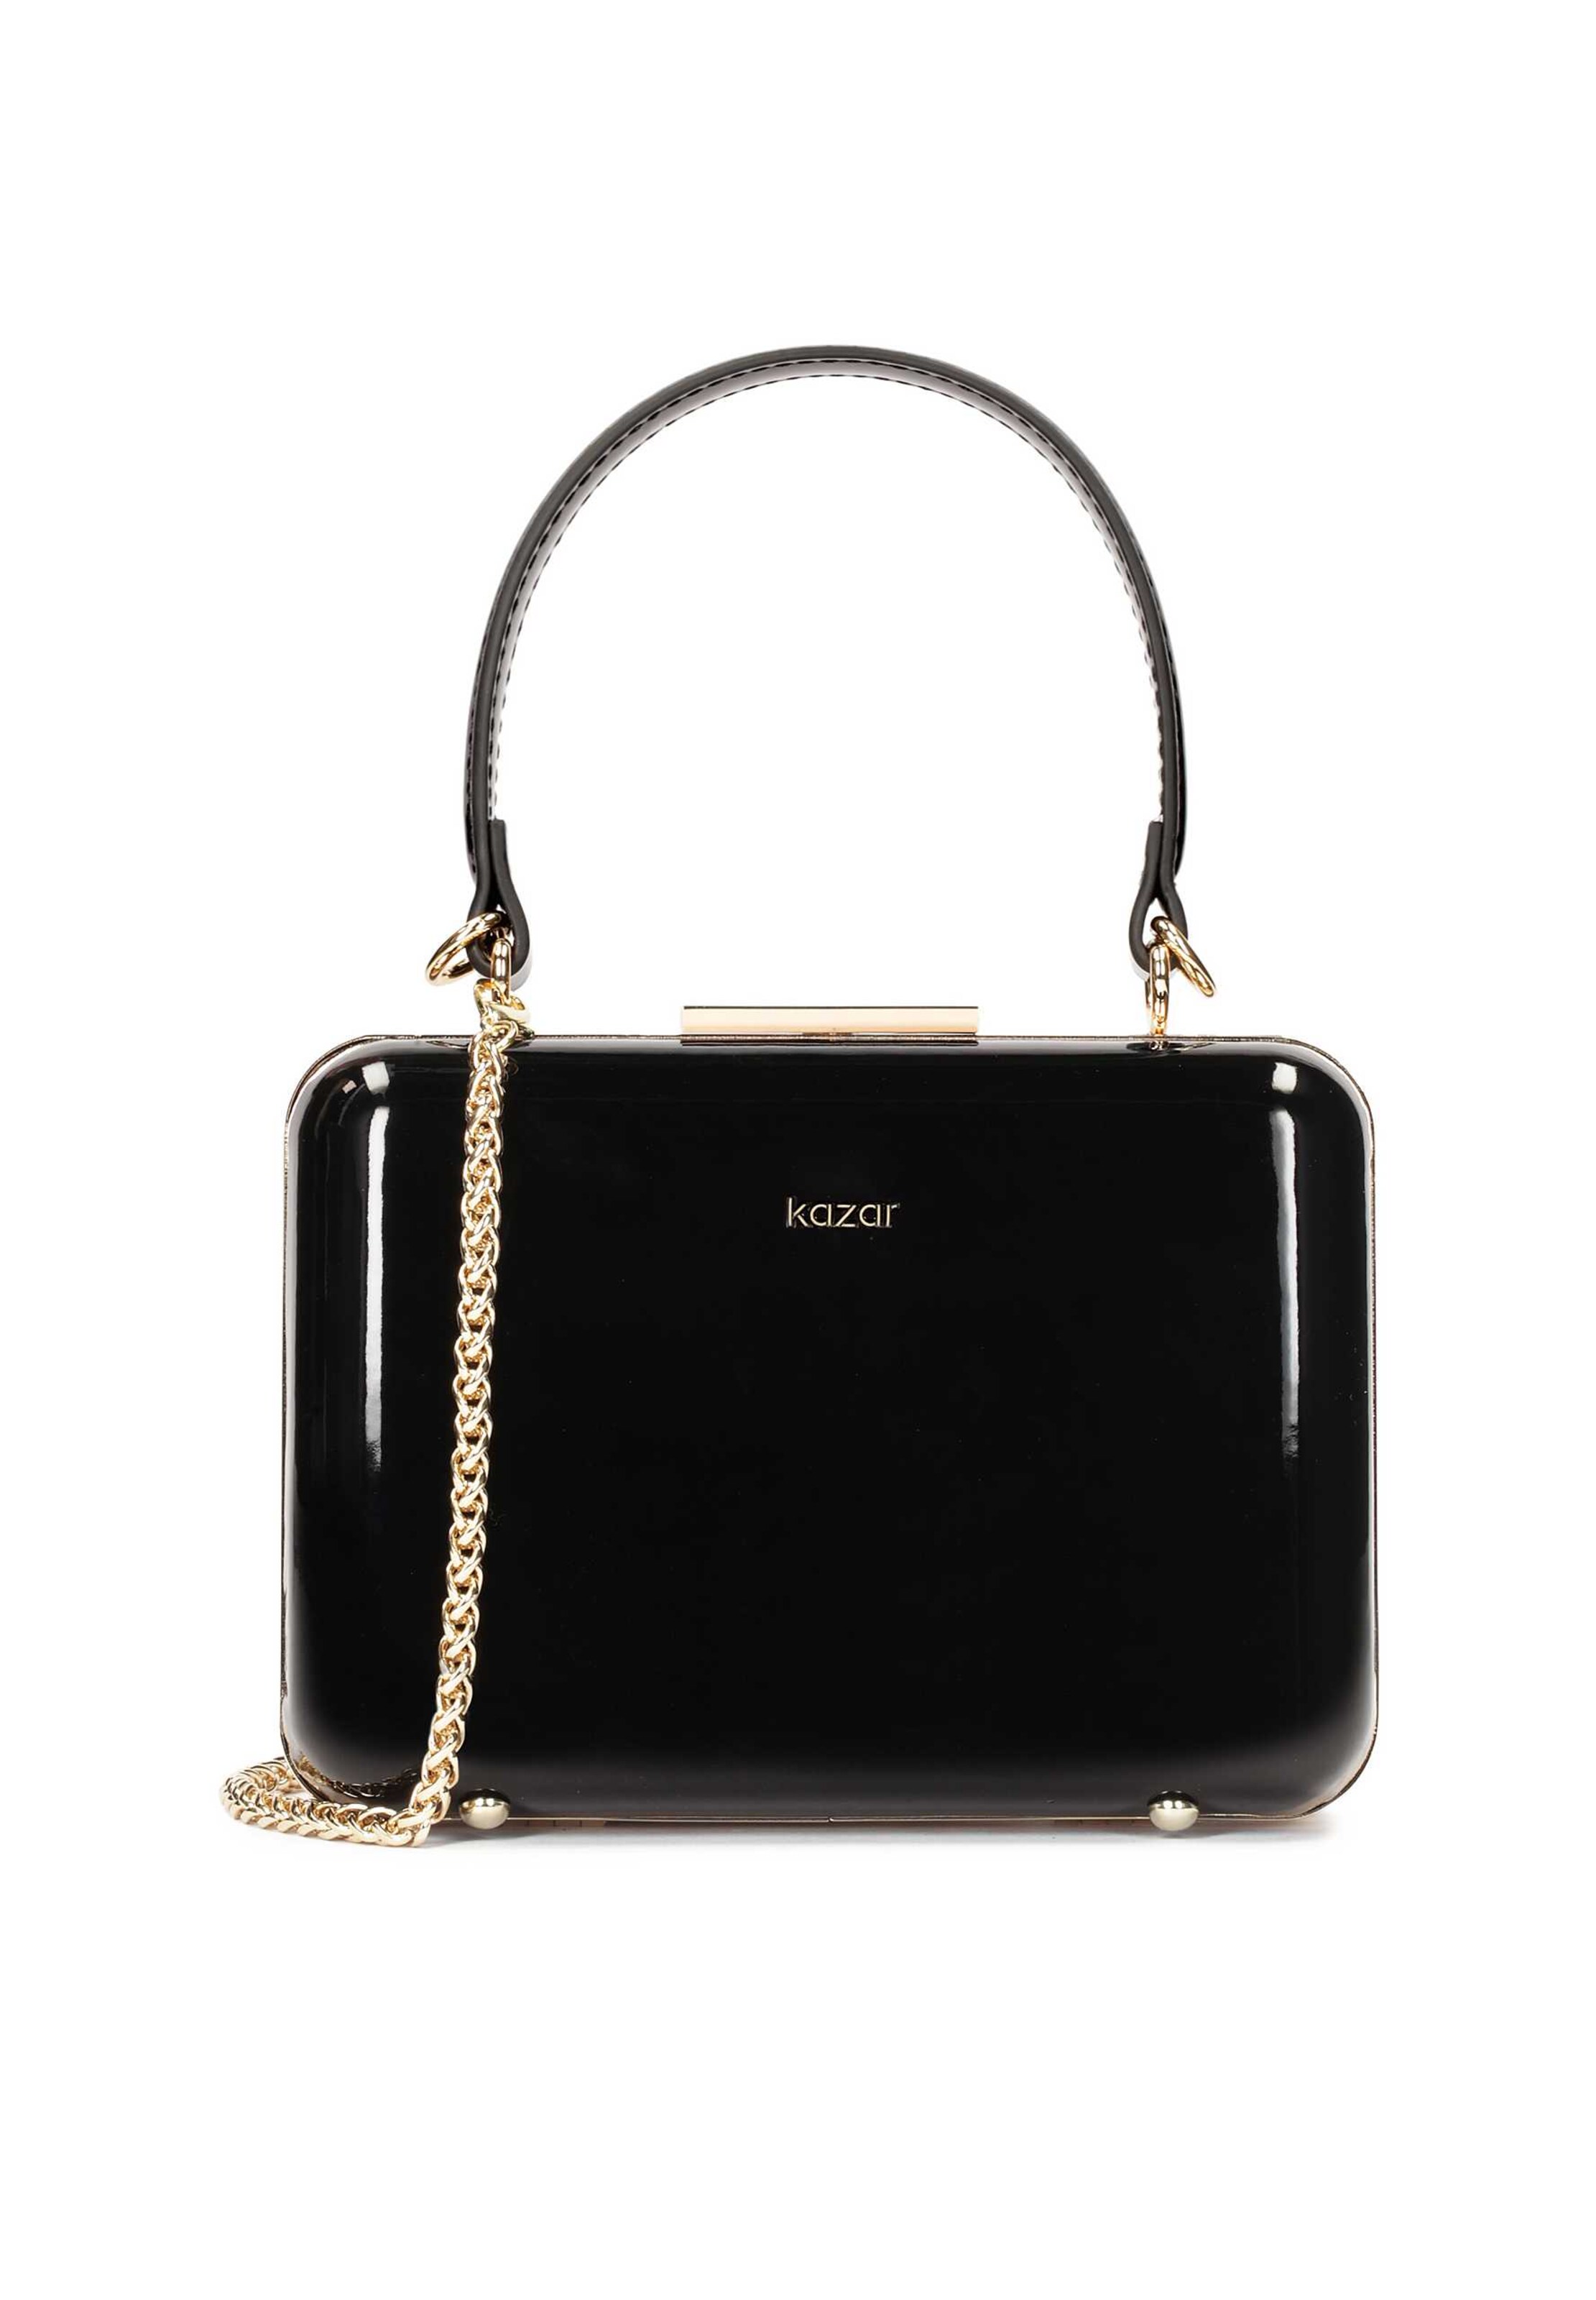 kazar handbag satchel tan & brown leather beautiful unique Pre-owned |  eBay